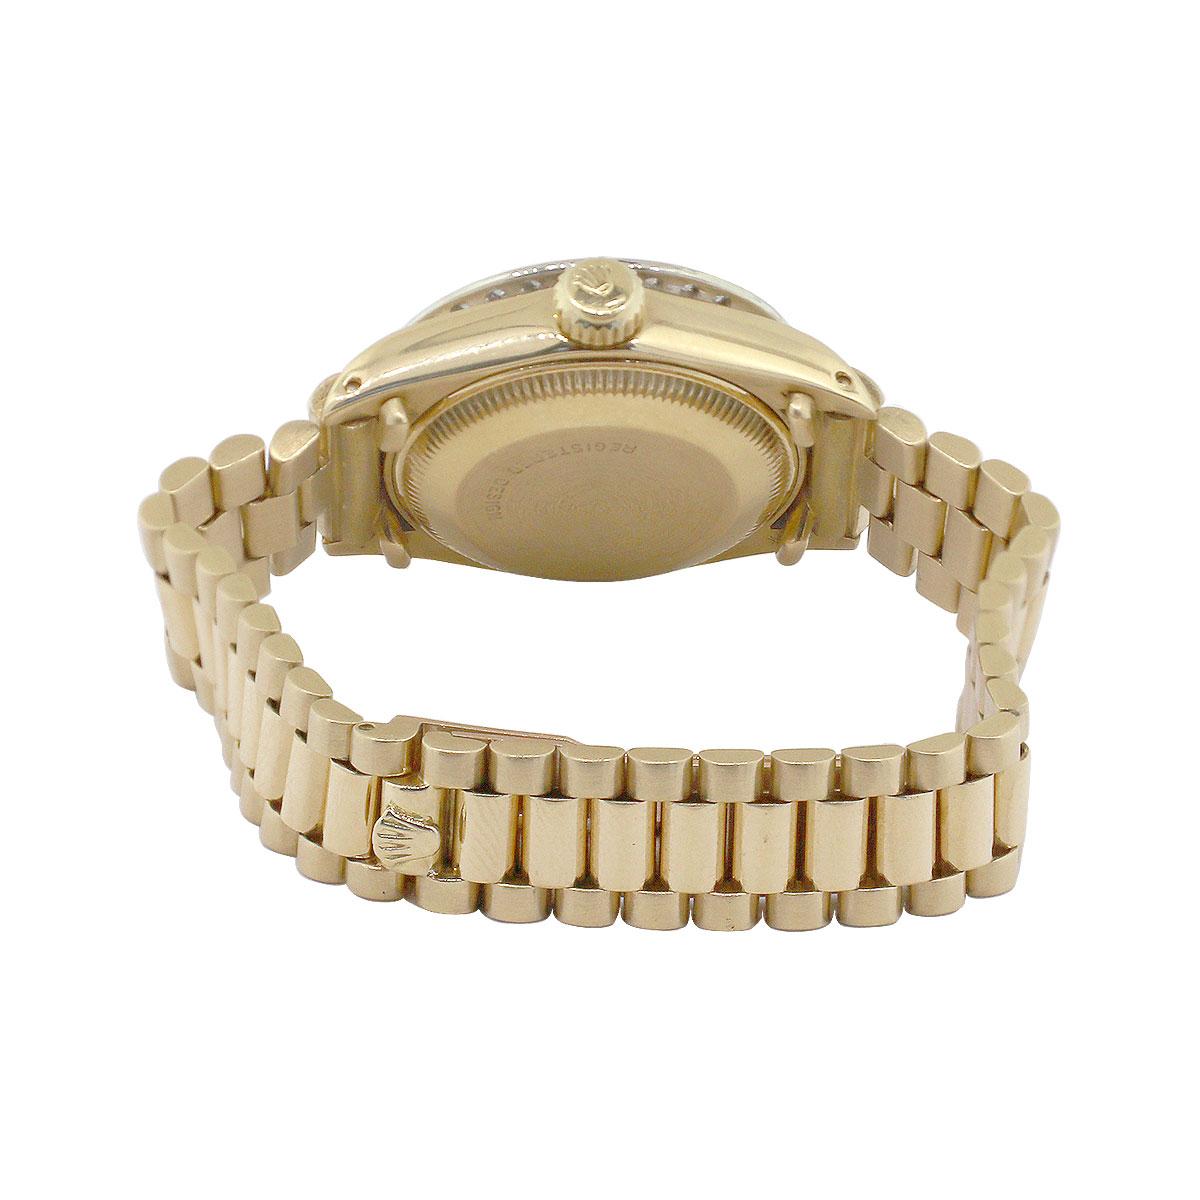 Round Cut Rolex 6917 Datejust Champagne Dial Diamond Bezel Watch